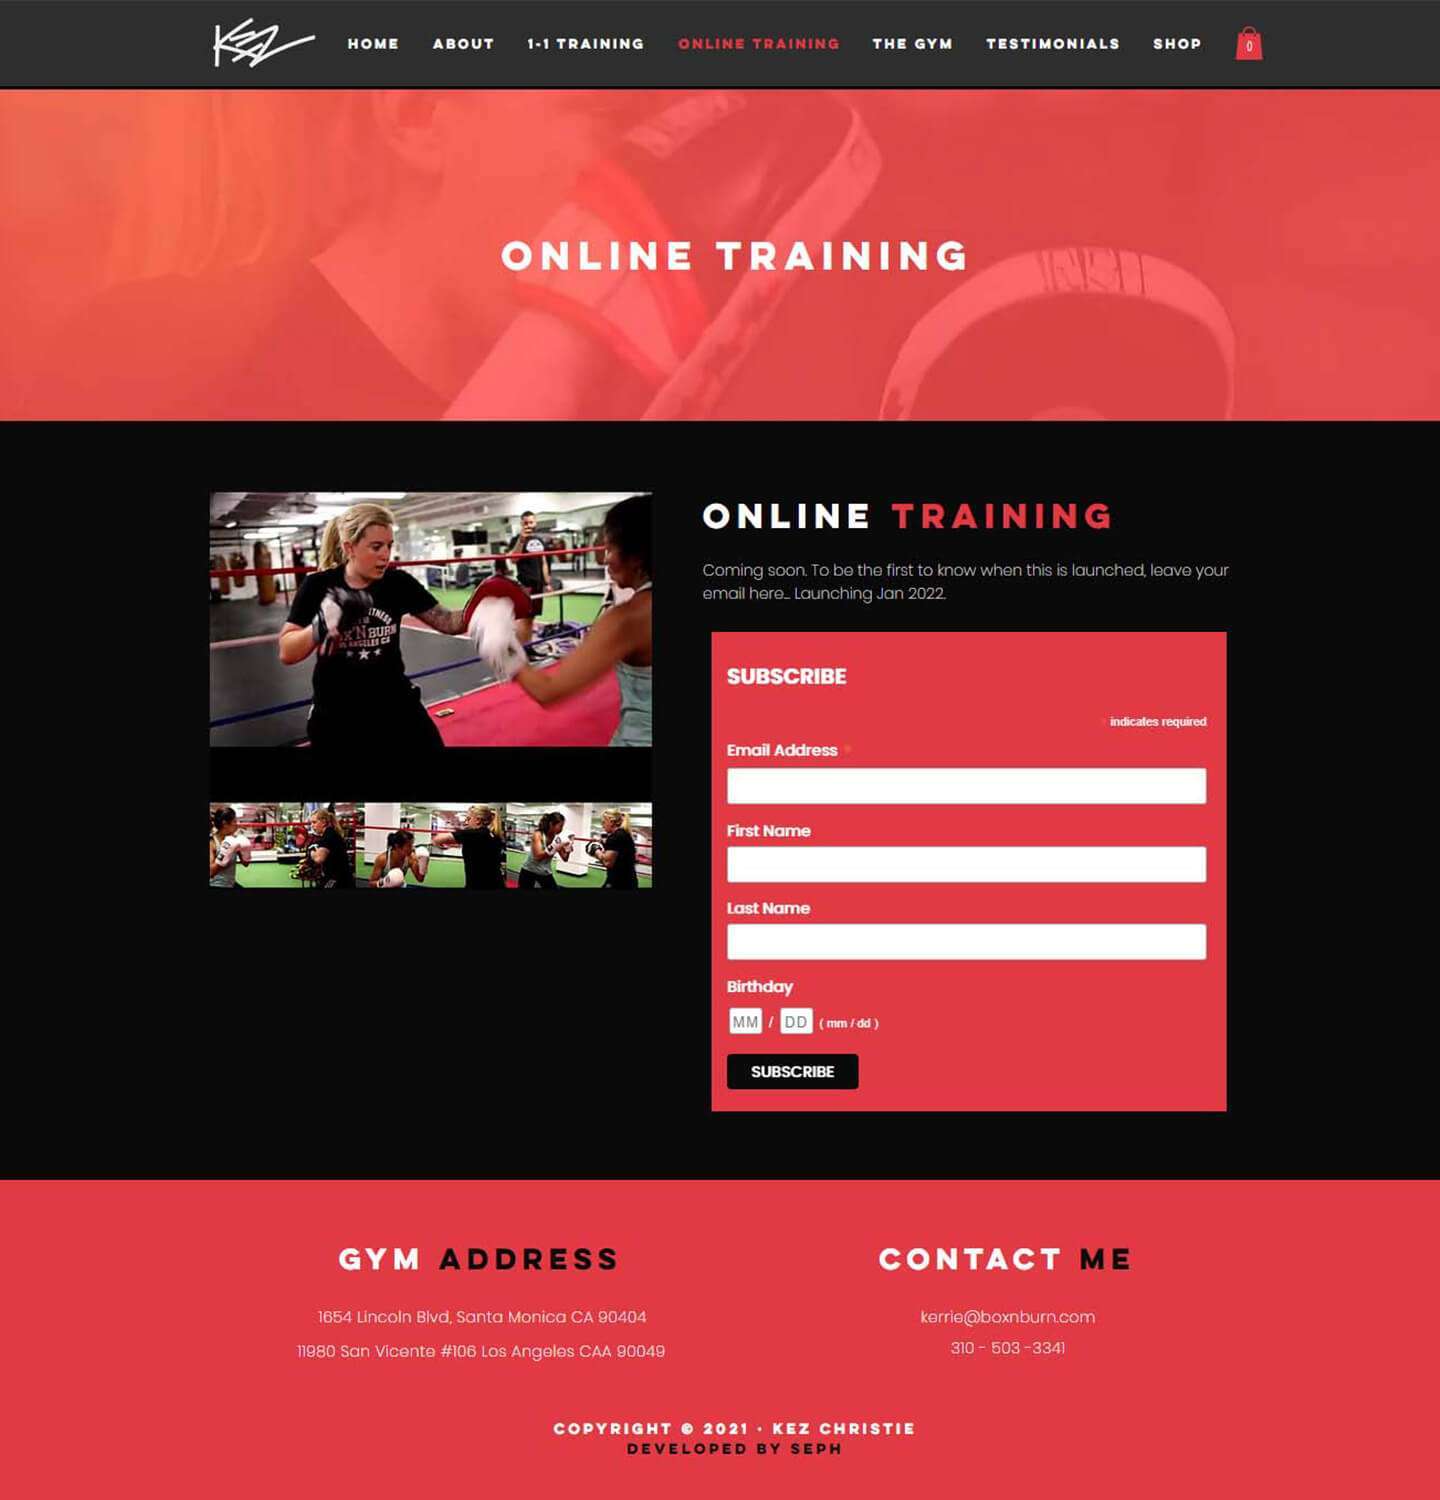 KCG - Online Training